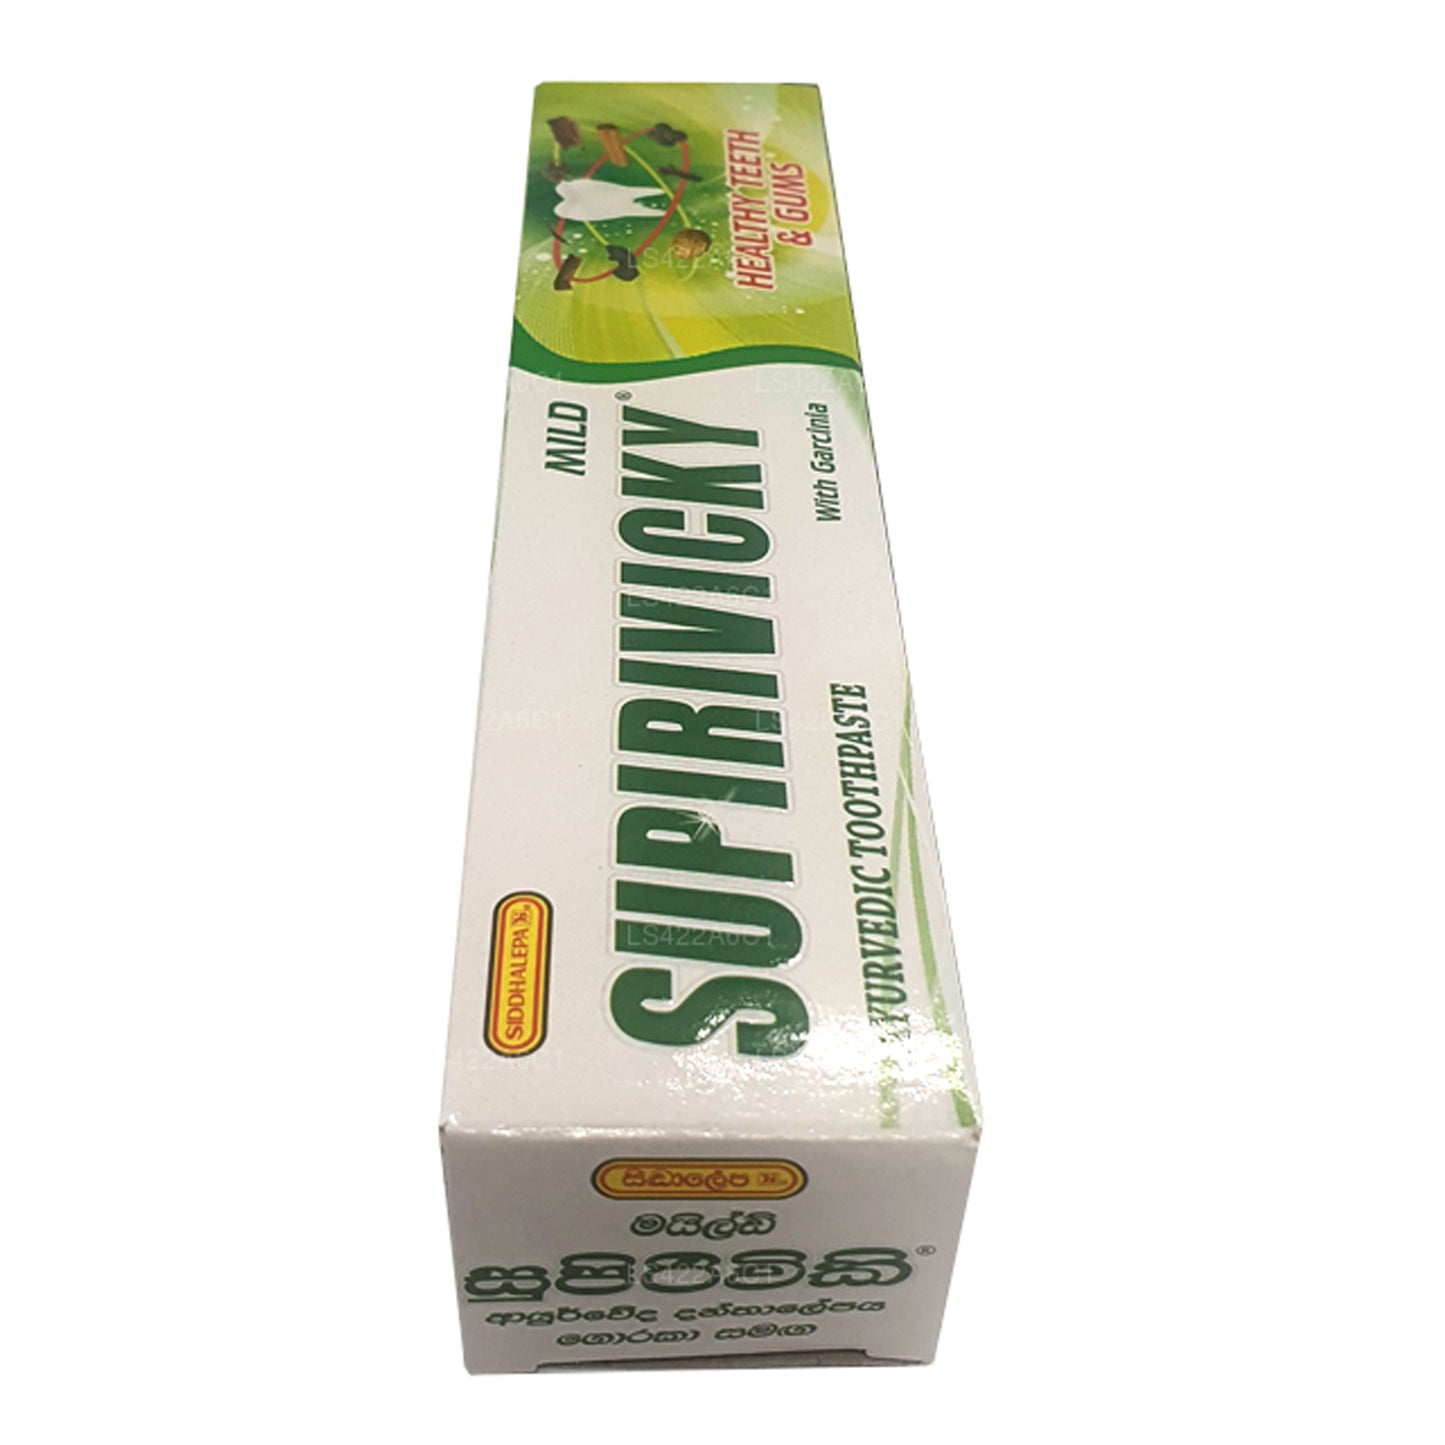 Siddhalepa Supirivicky mild ayurvedisk tandpasta (40 g)